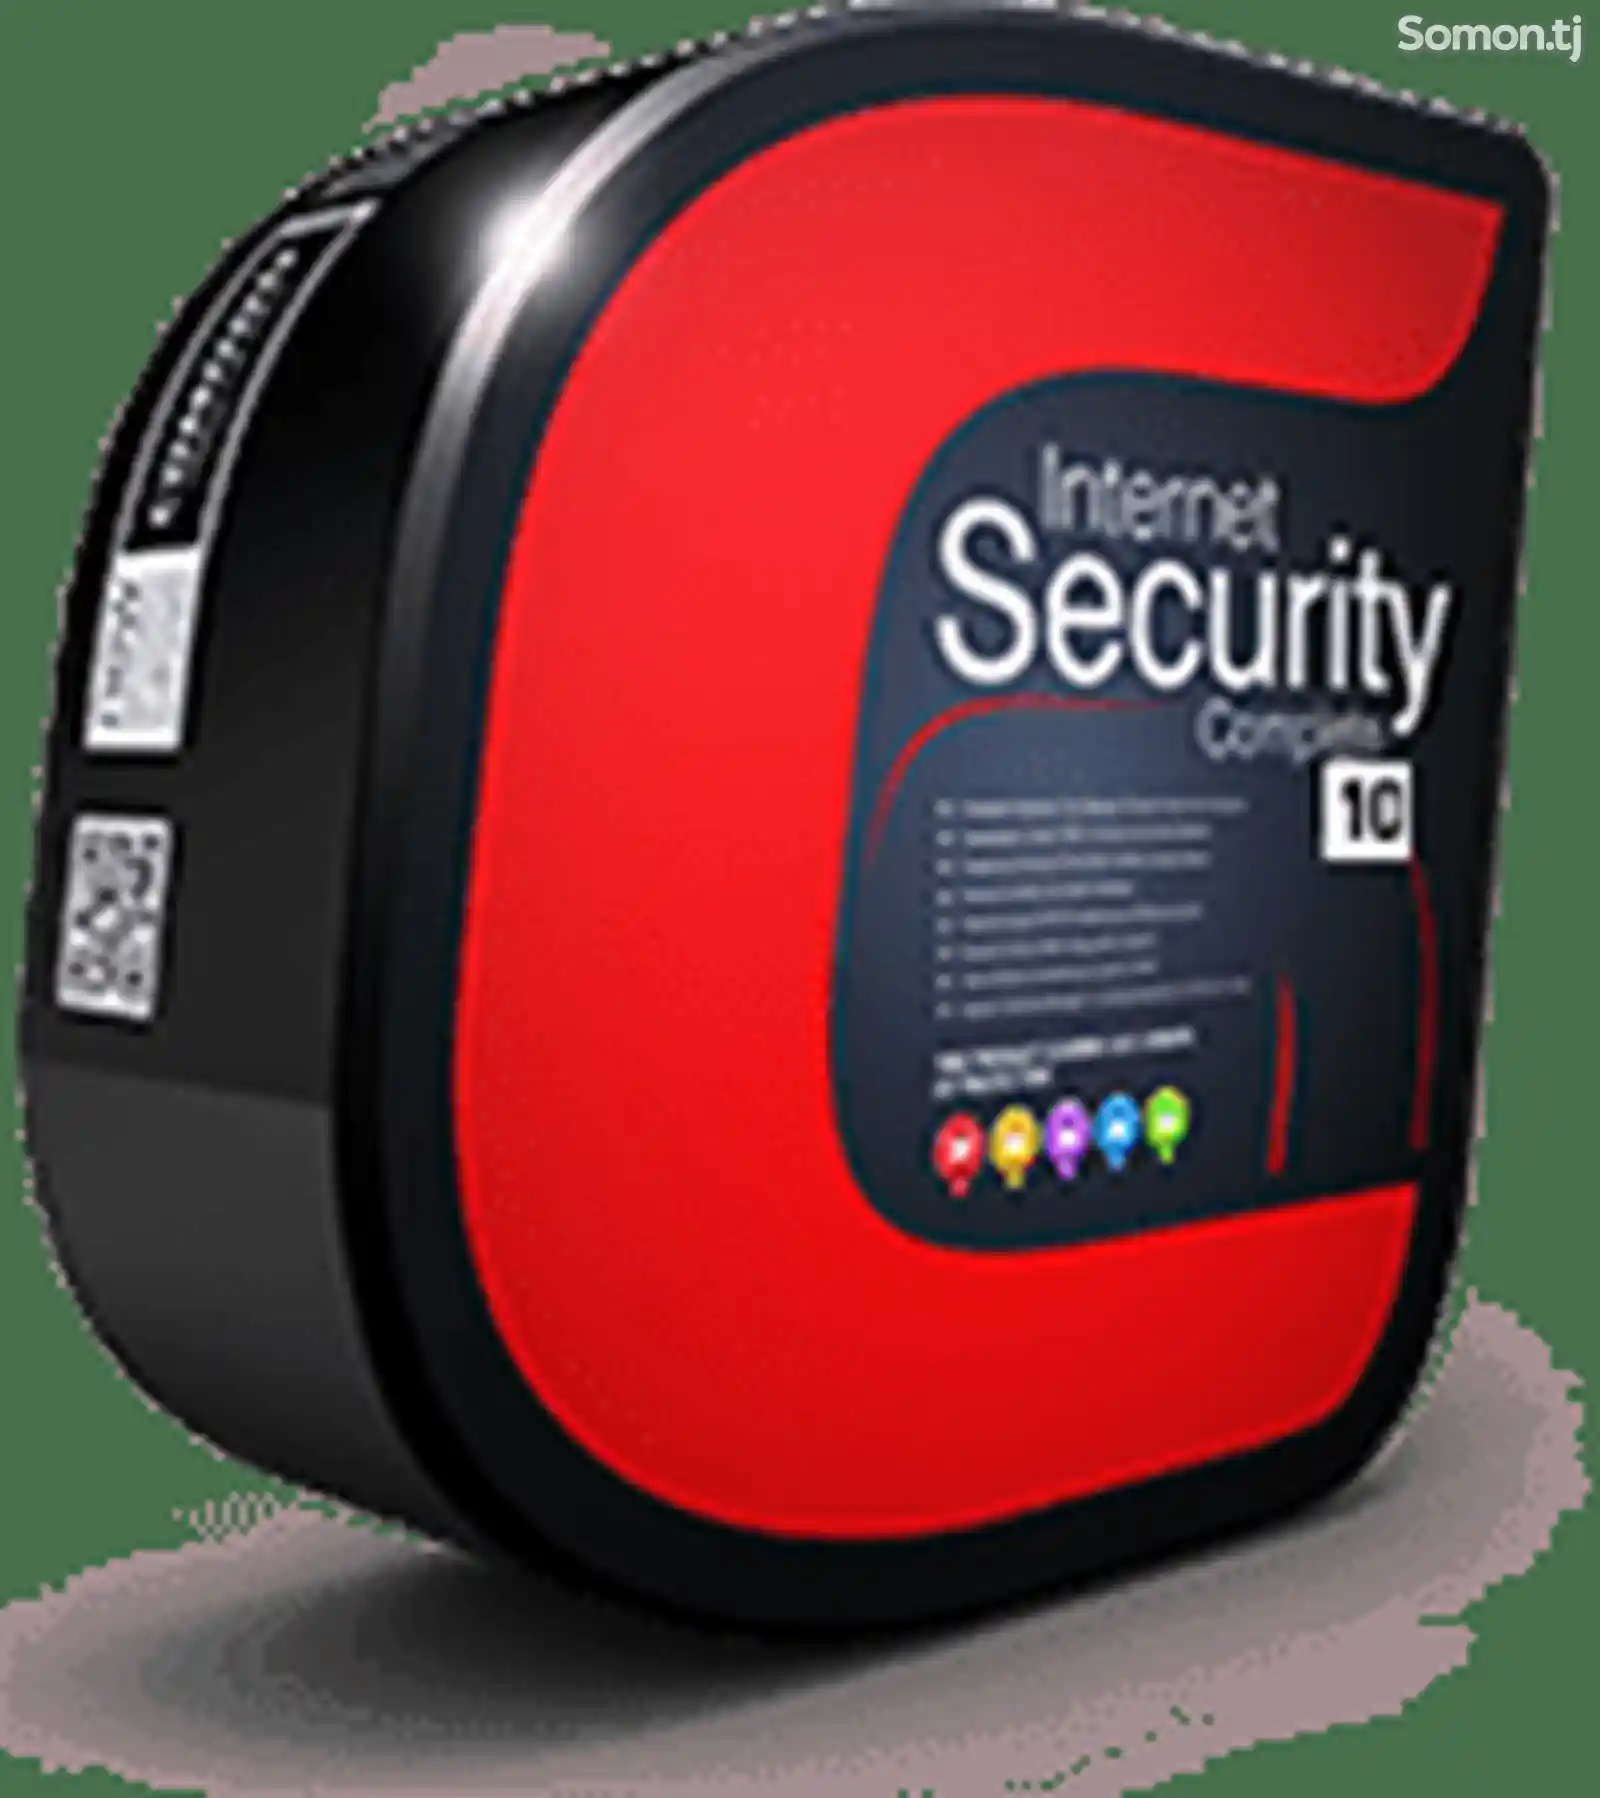 Антивирус Comodo Internet Security Pro - иҷозатнома барои 3 роёна/кп, 1 сол